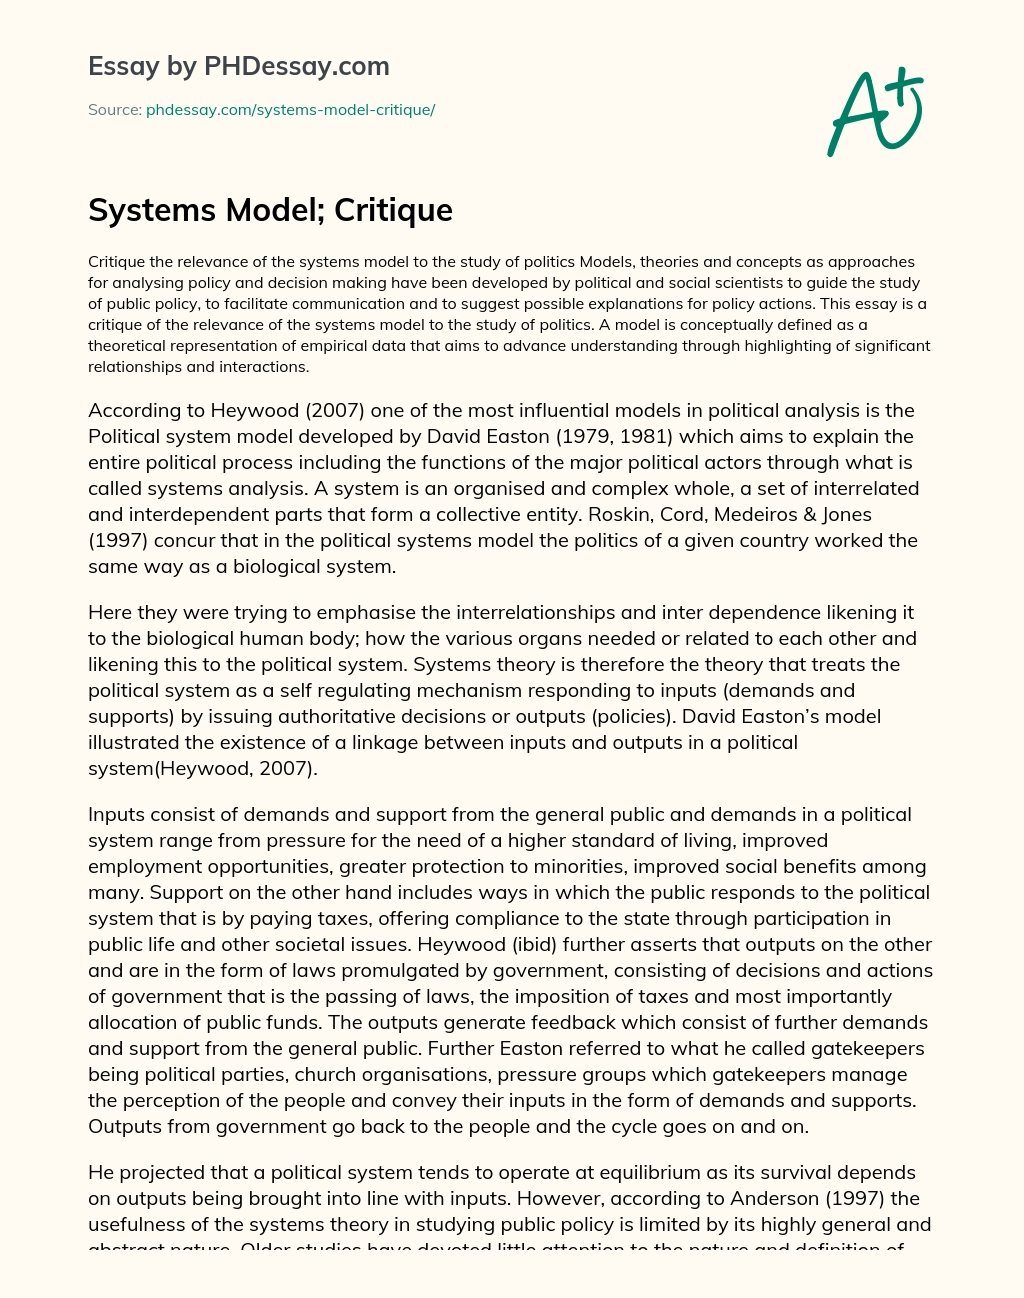 Systems Model; Critique essay